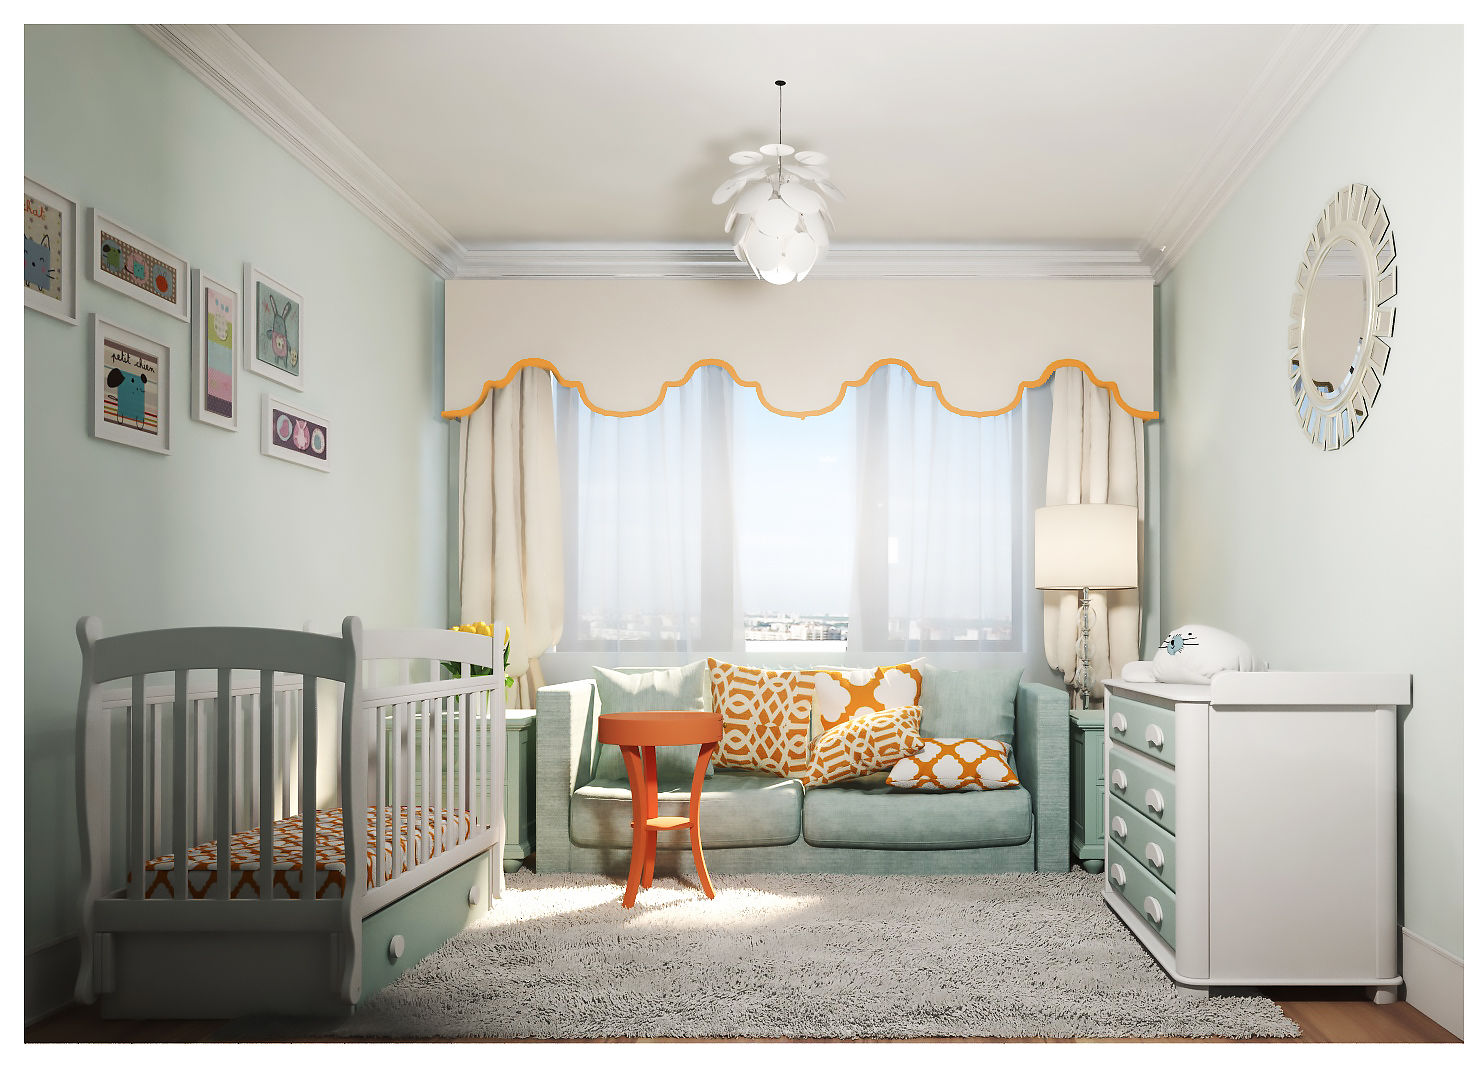 3-bedroom Apartment, Moscow , Alexander Krivov Alexander Krivov Quarto infantil clássico